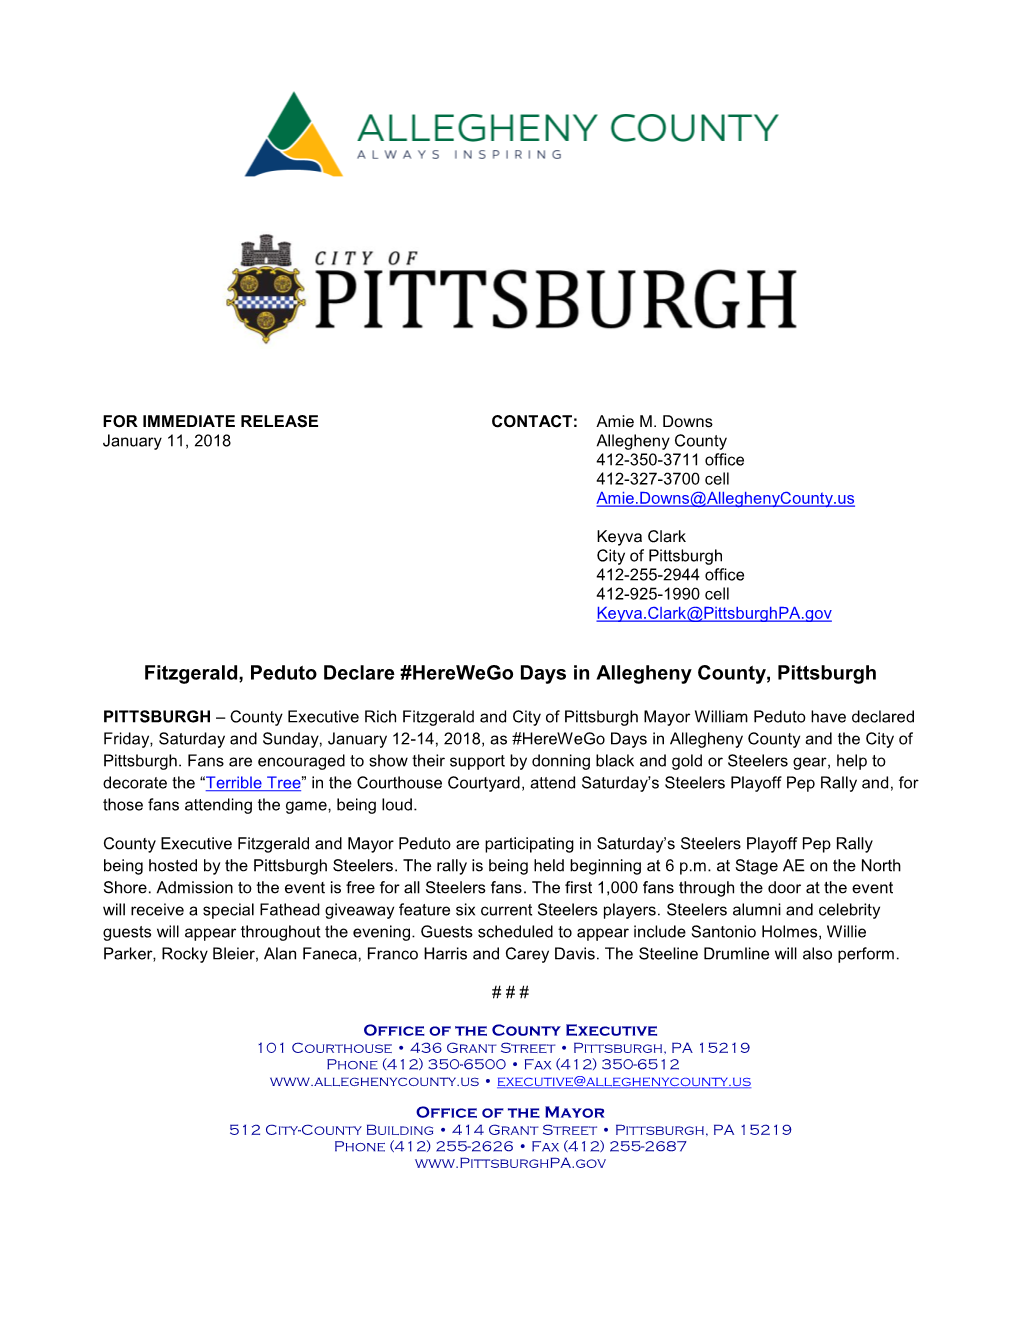 Fitzgerald, Peduto Declare #Herewego Days in Allegheny County, Pittsburgh